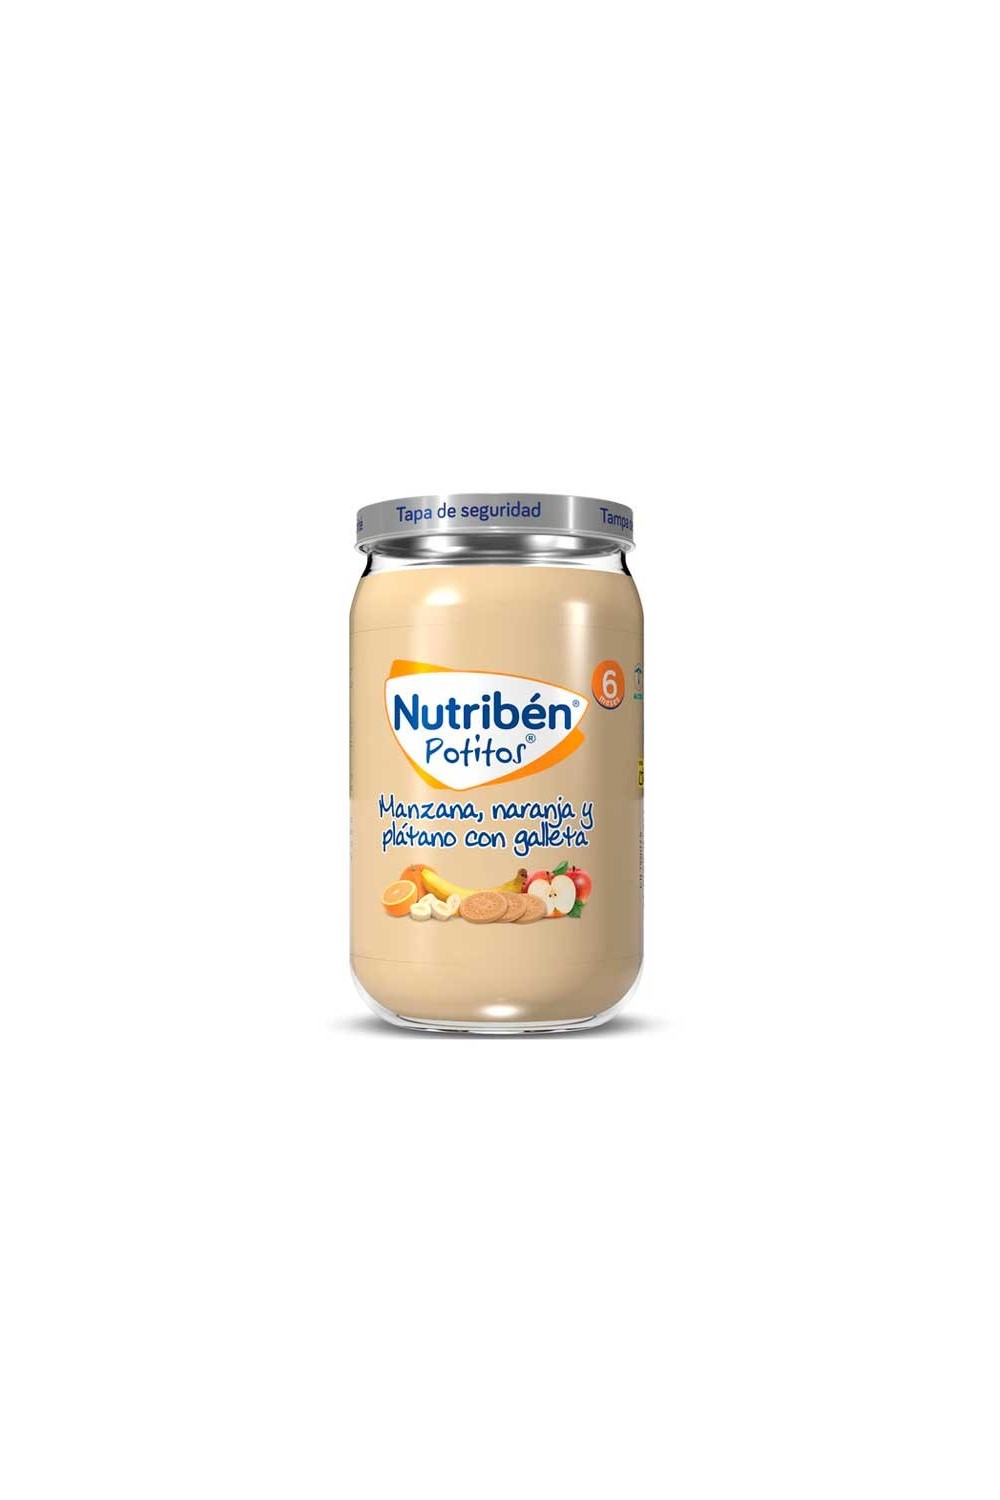 NUTRIBEN - Nutribén Apple, Orange, Banana, Banana and Biscuits Potito 235g